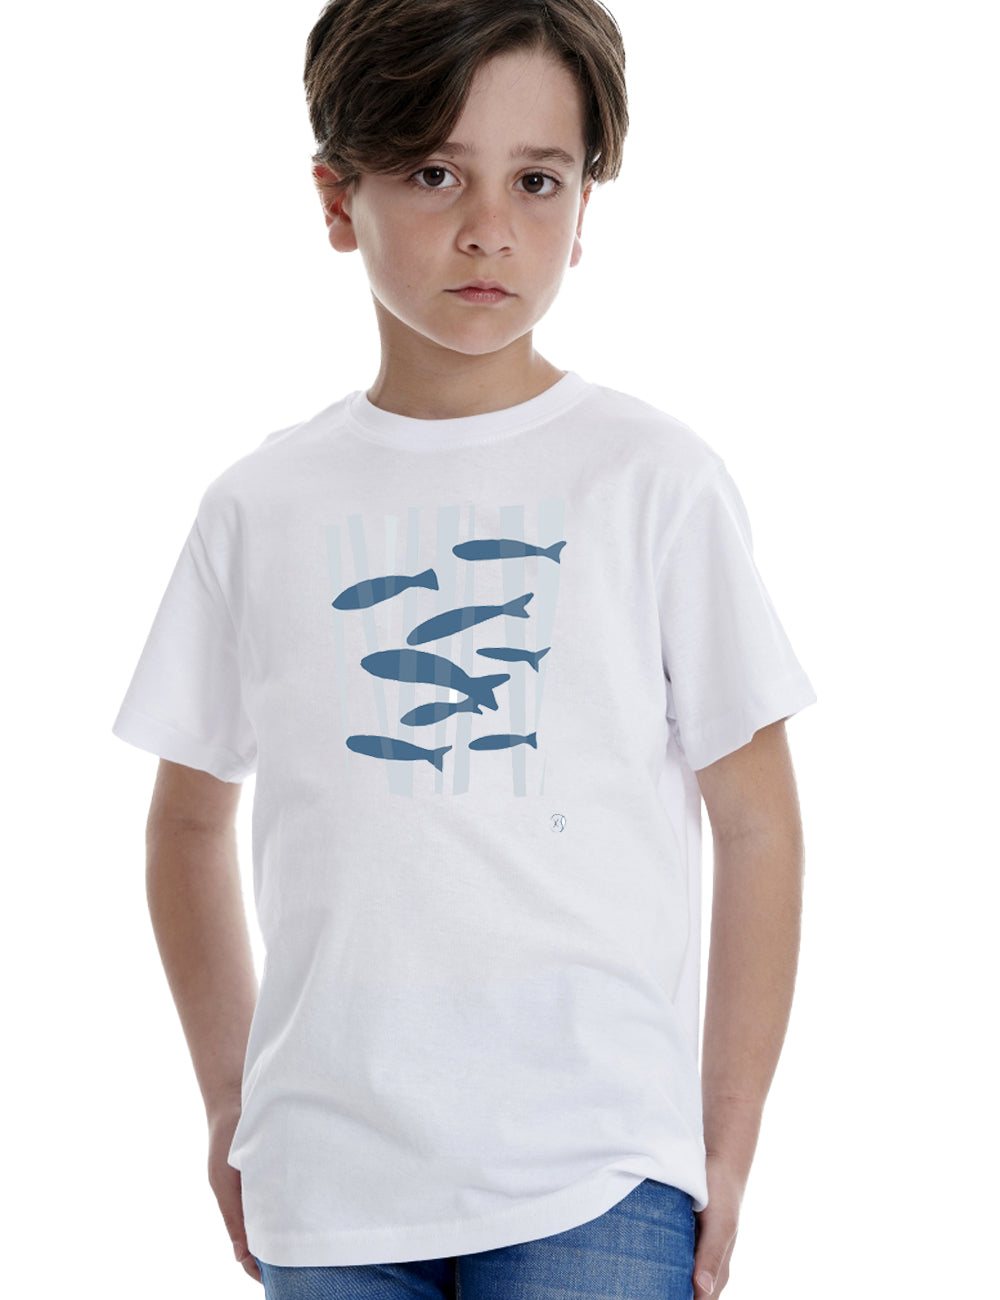 Bancal Kids T-Shirt